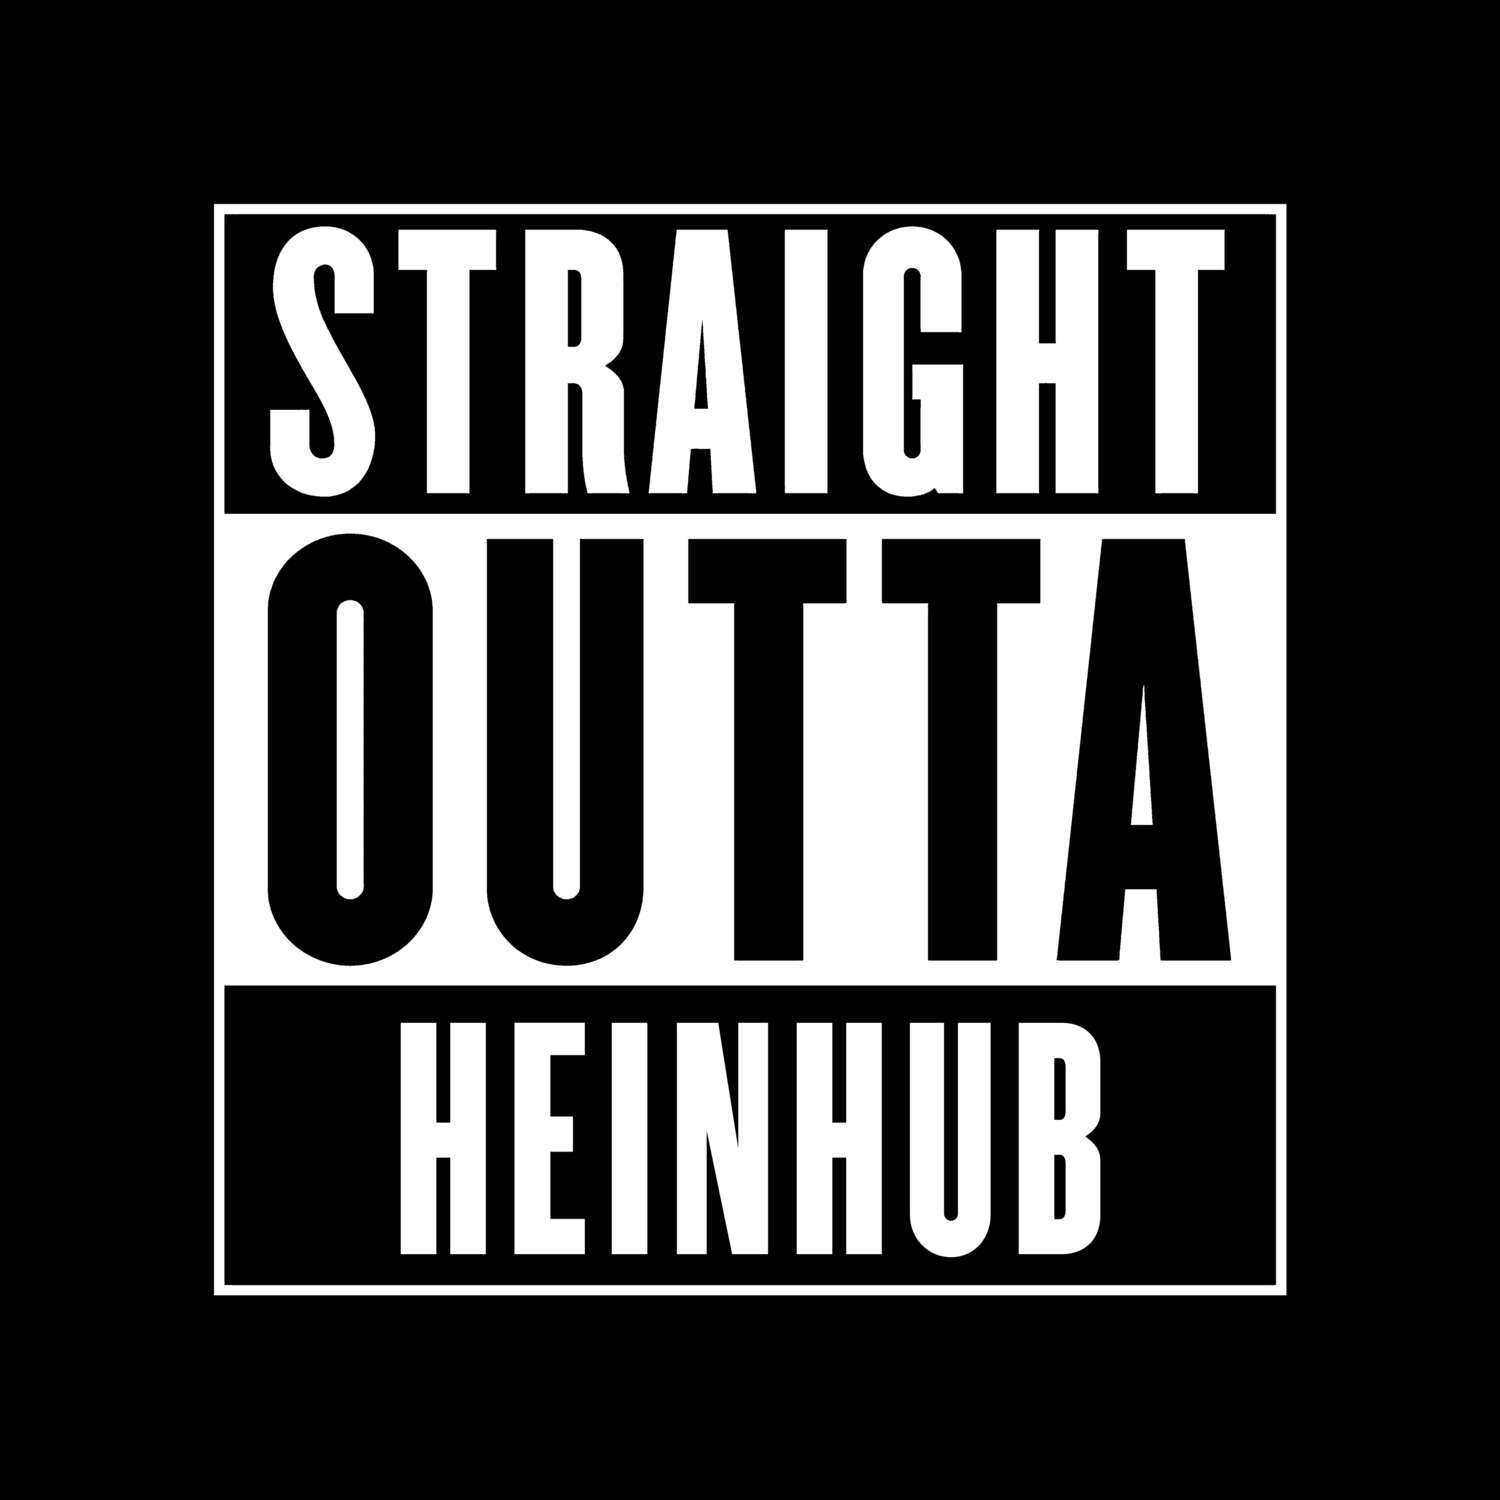 Heinhub T-Shirt »Straight Outta«